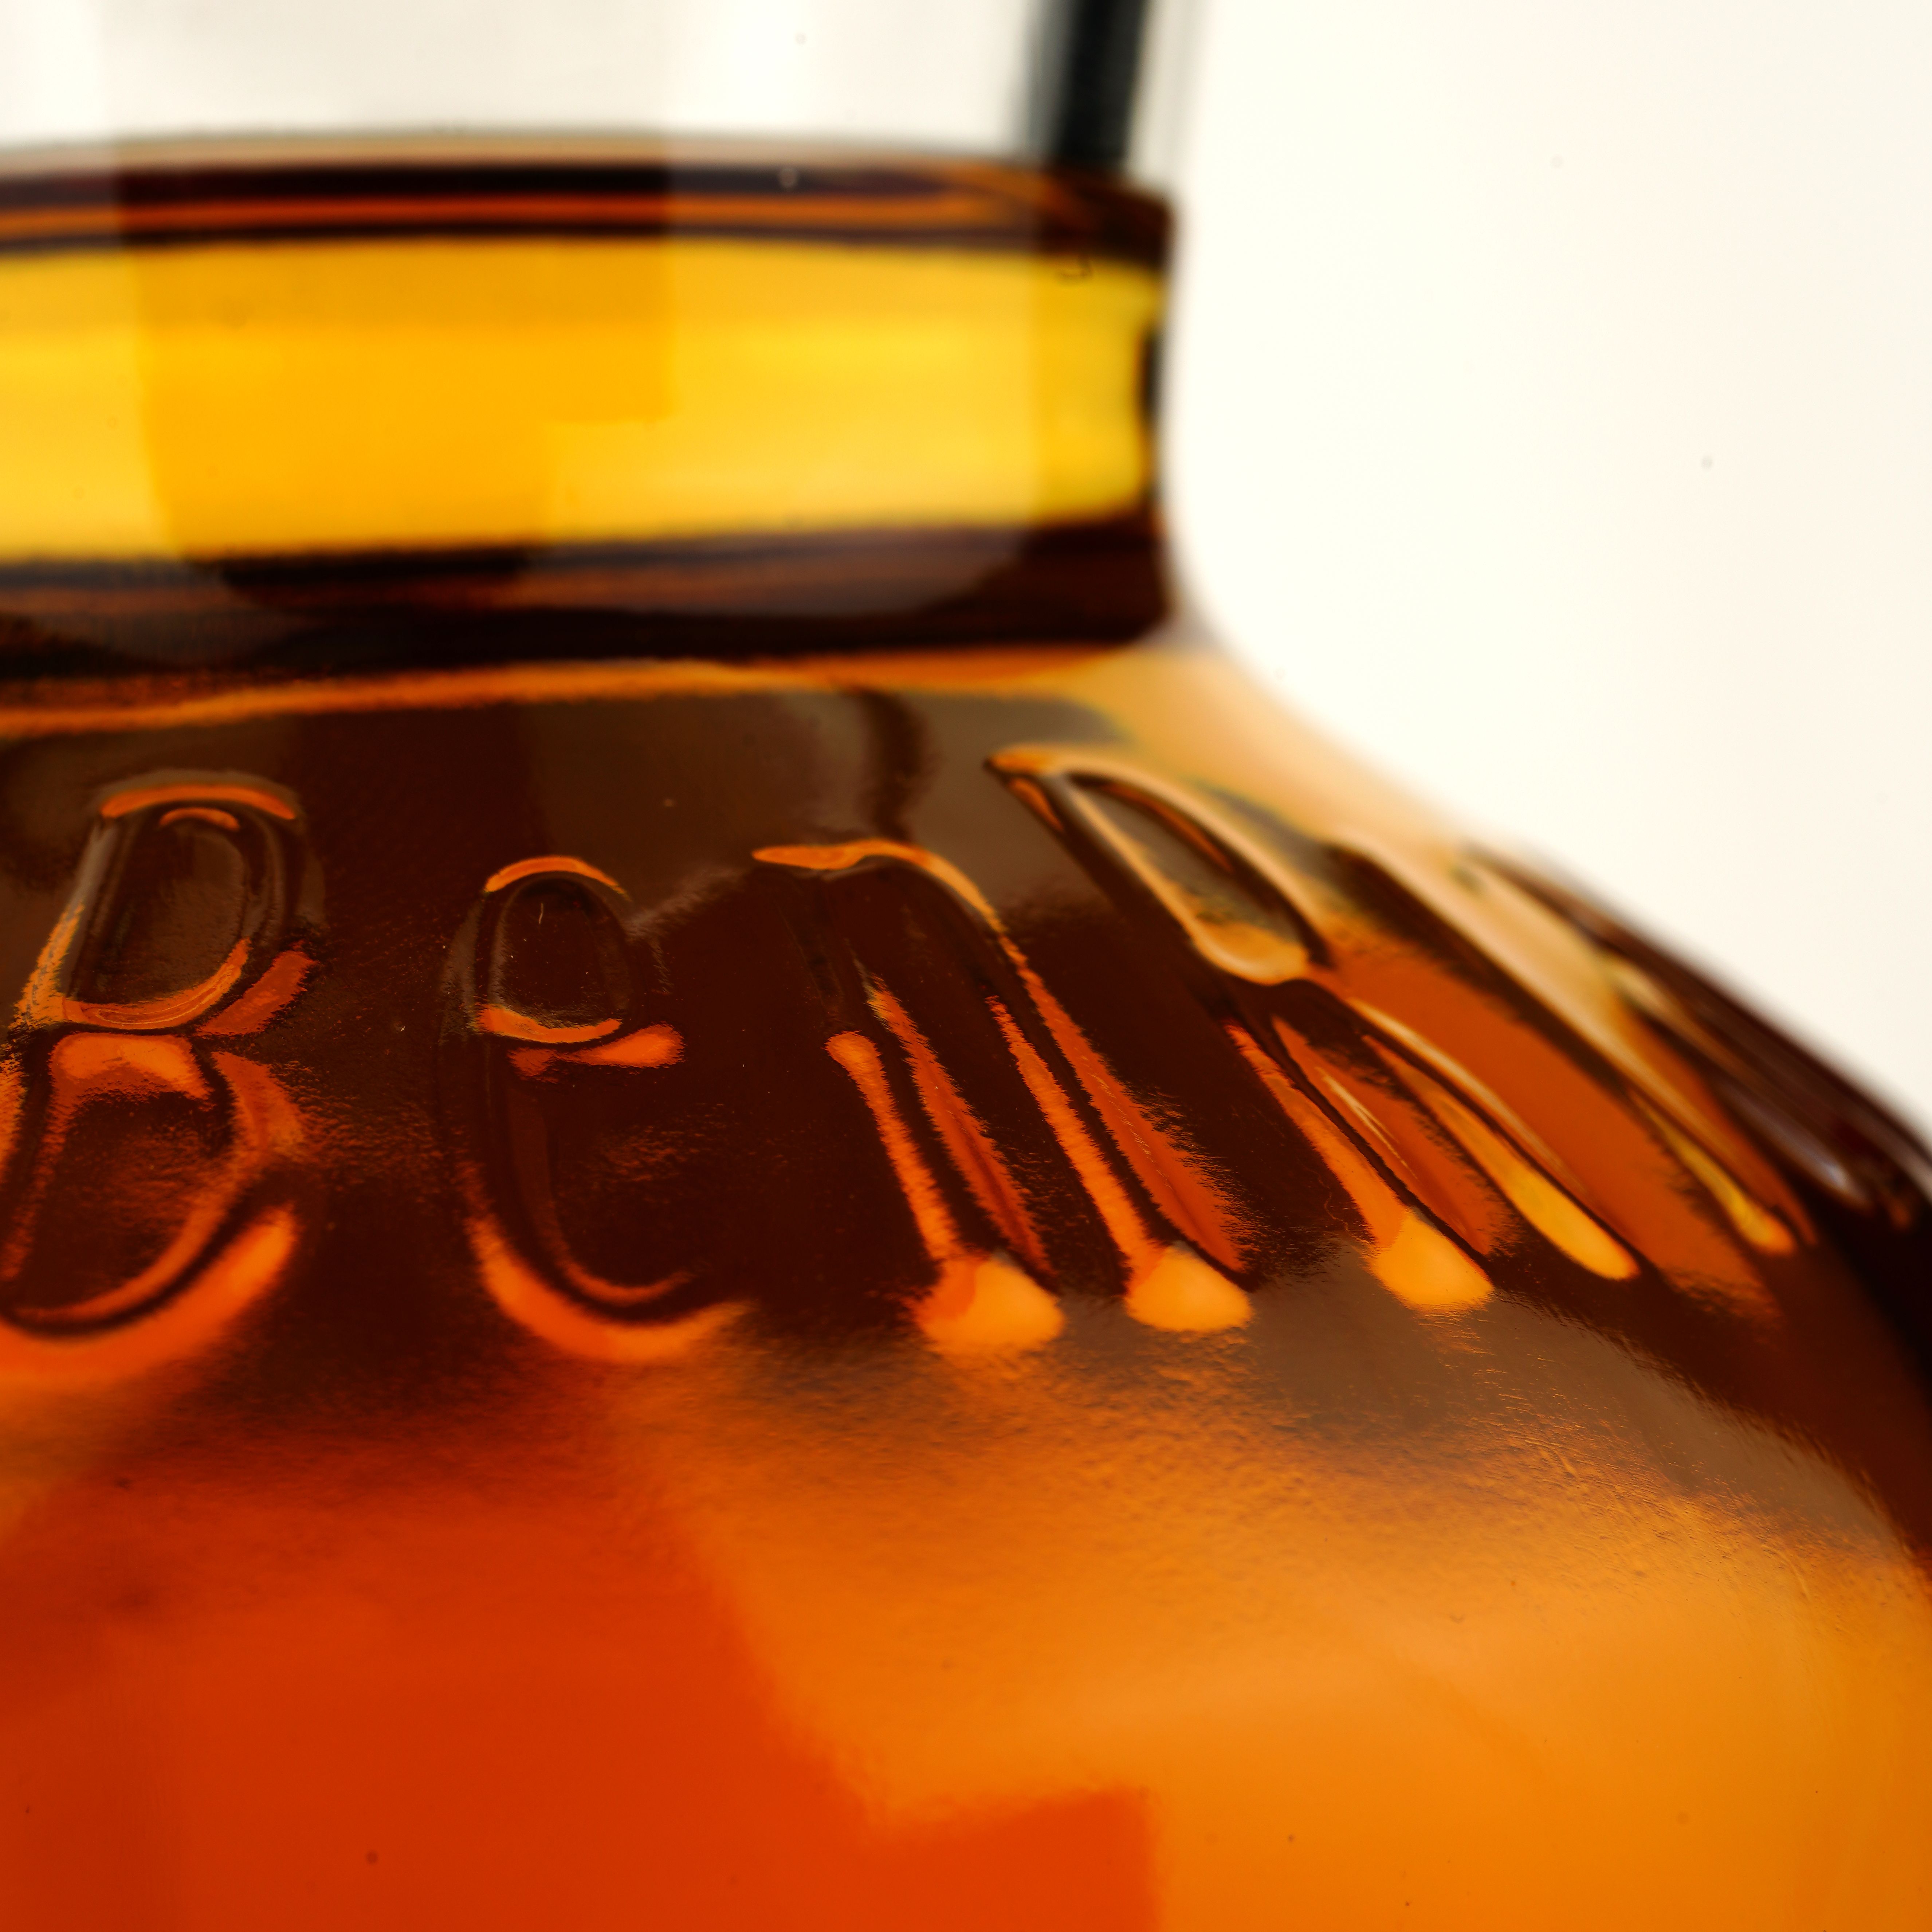 Виски BenRiach 16 Years Old Virgin Oak Hogshead Cask 3269 Single Malt Scotch Whisky, в подарочной упаковке, 49,3%, 0,7 л - фото 7